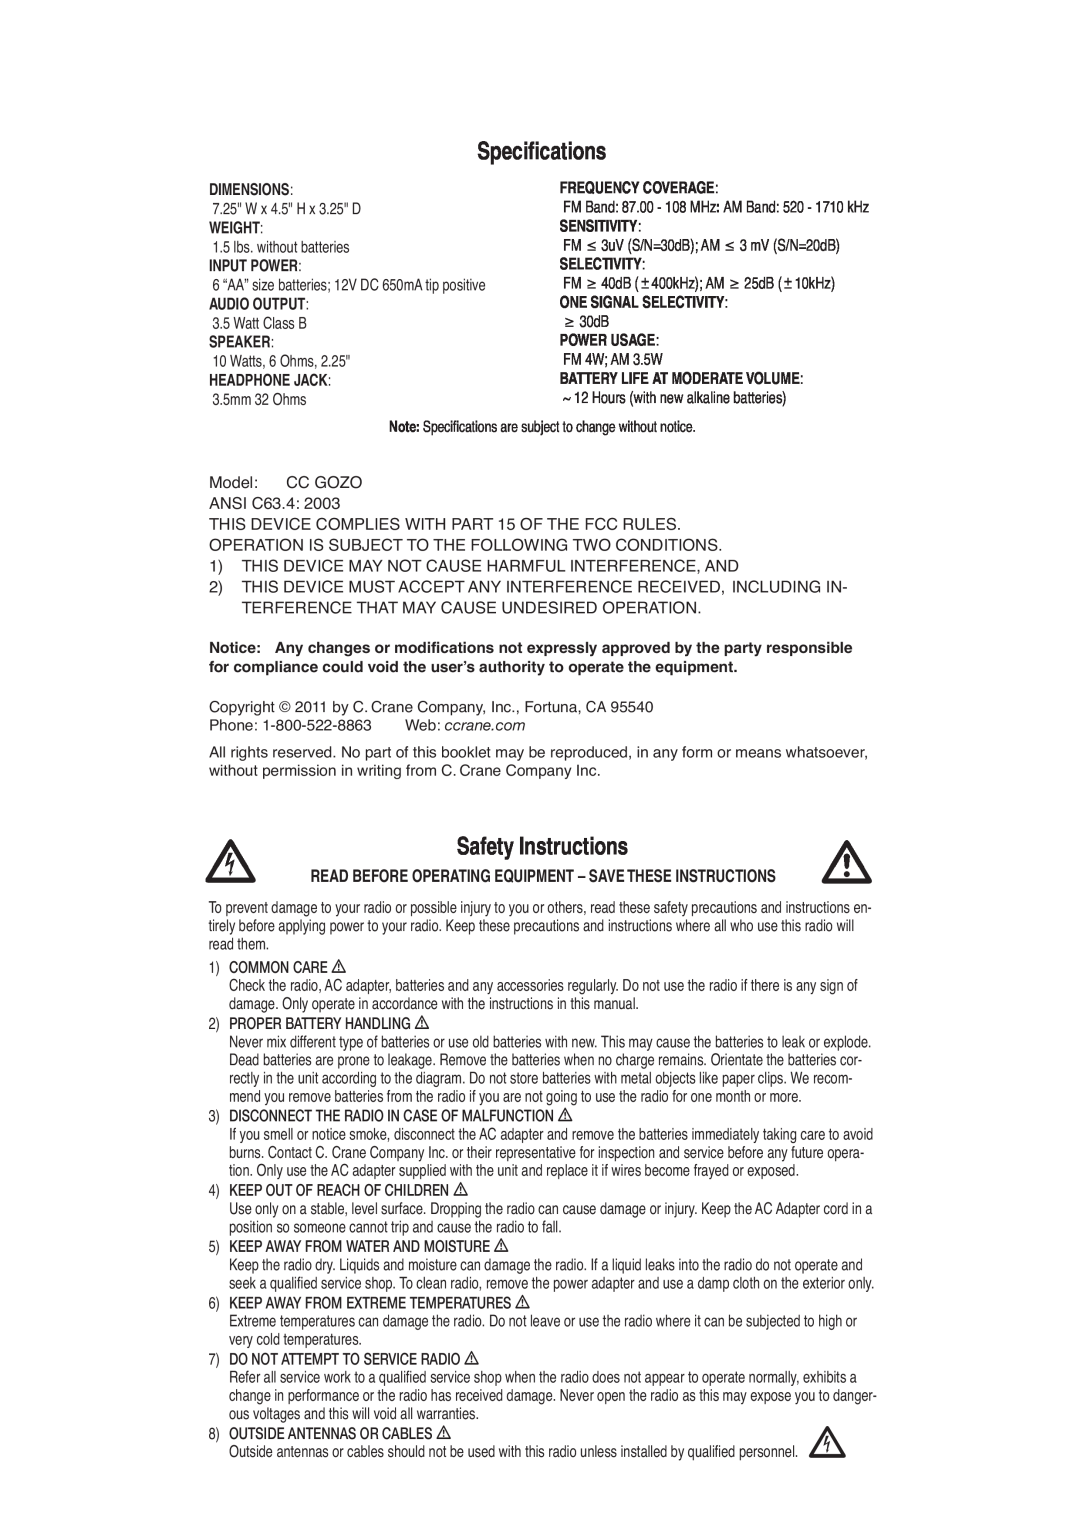 C. Crane CC Gozo instruction manual Specifications 